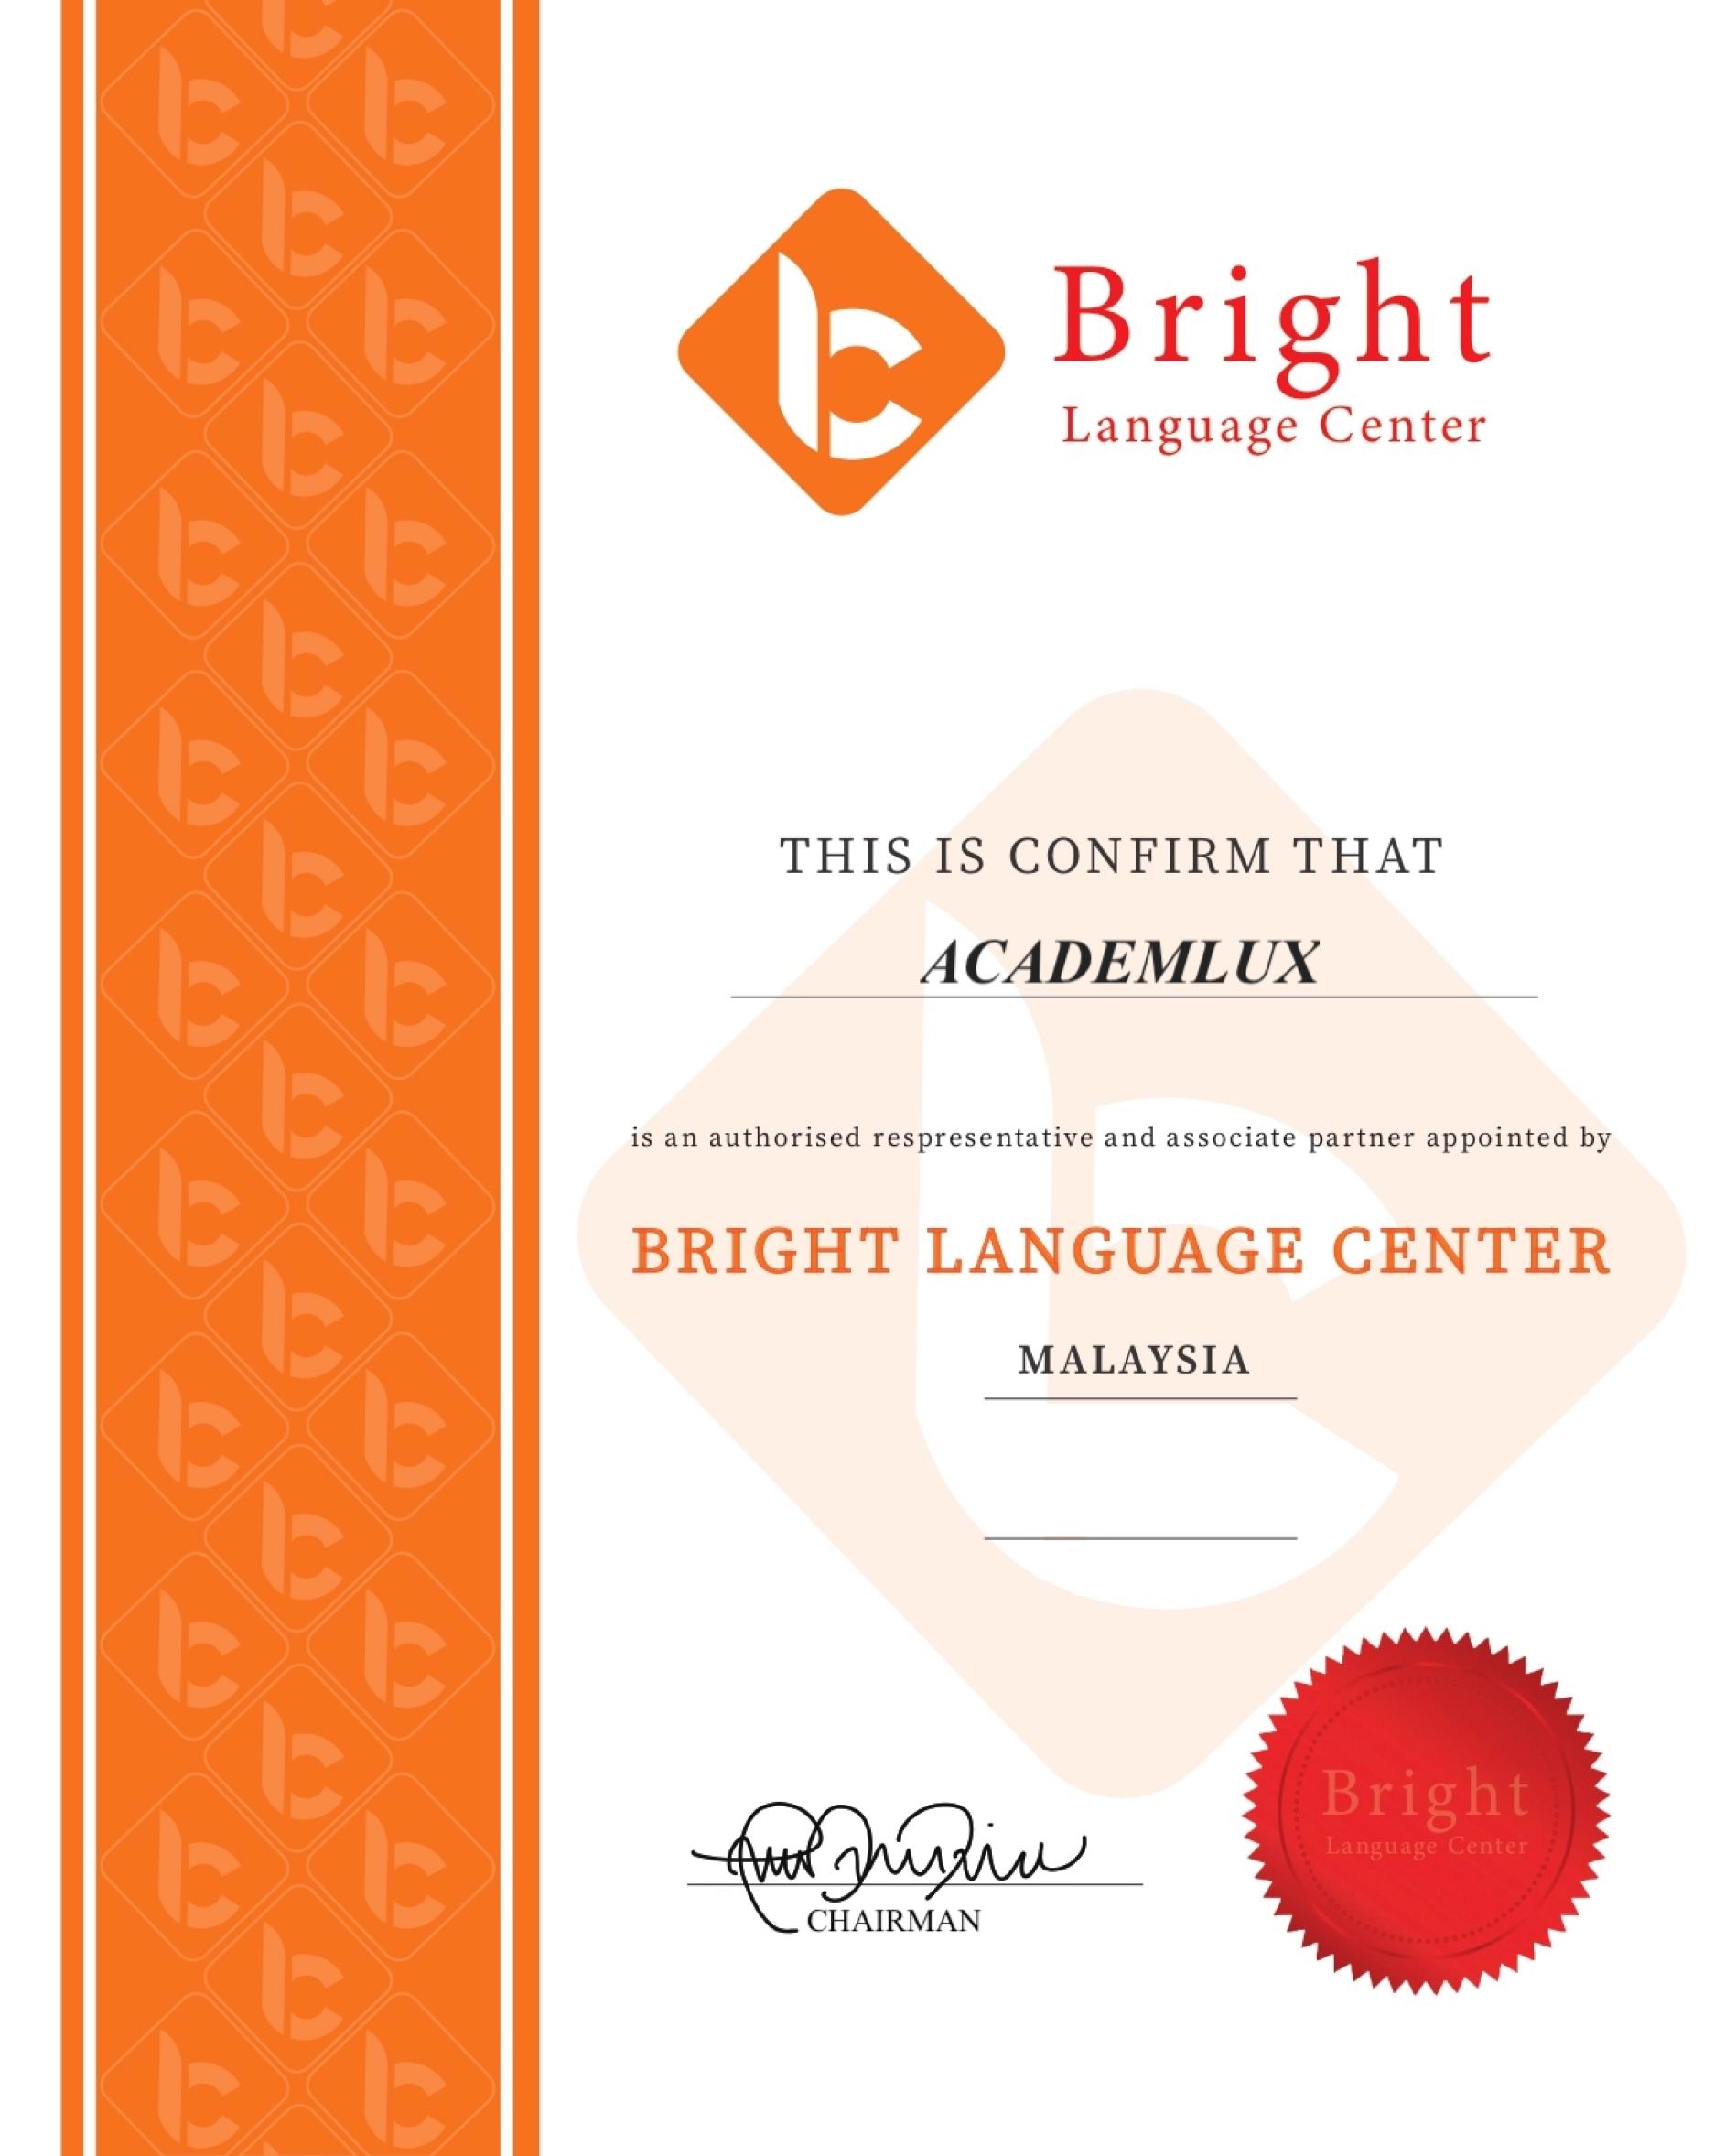 Сертификат Academlux от Bright Language Center